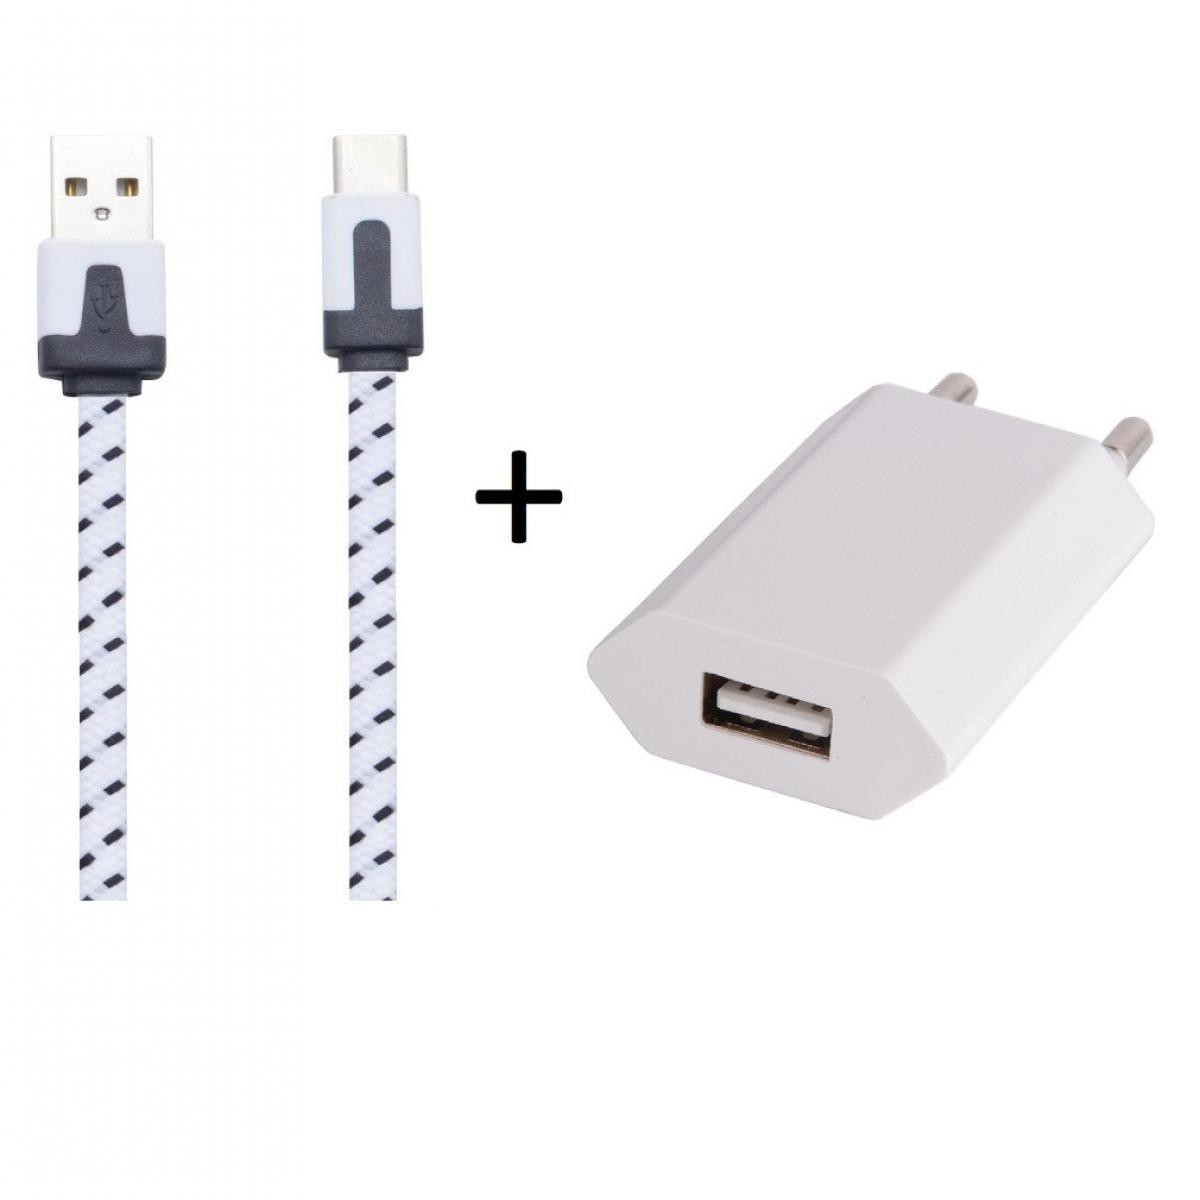 Shot - Pack Chargeur pour "OPPO Find X2 Neo" Smartphone Type C (Cable Noodle 1m Chargeur + Prise Secteur USB) Murale Android (BLANC) - Chargeur secteur téléphone